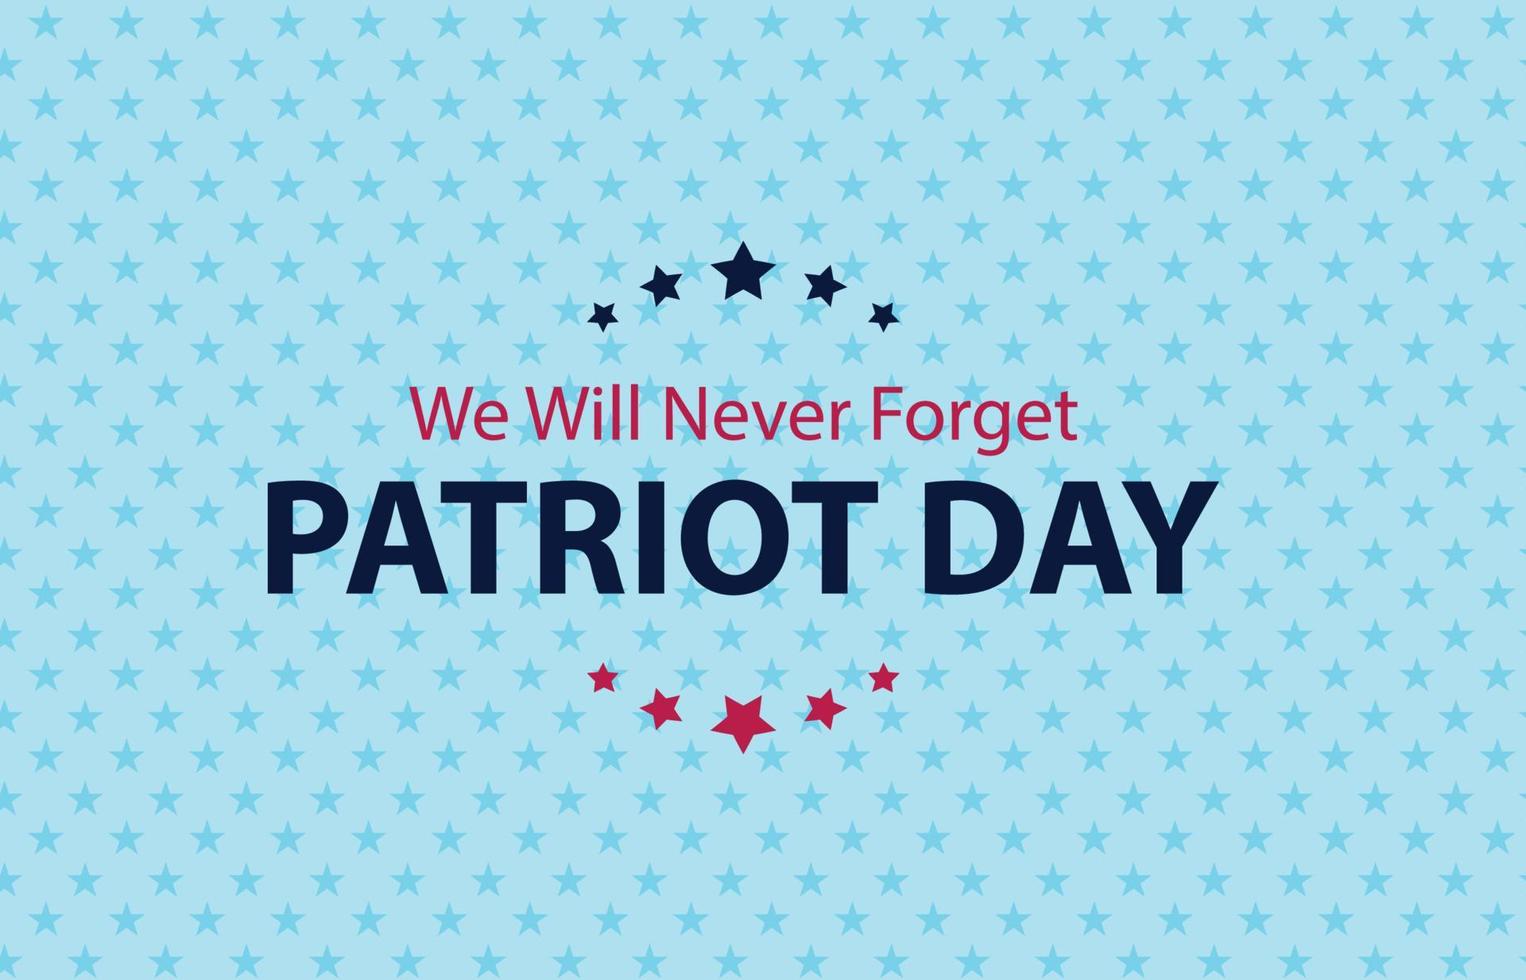 patriot dag achtergrond. 11 september affiche. we zullen nooit vergeten. vector illustratie